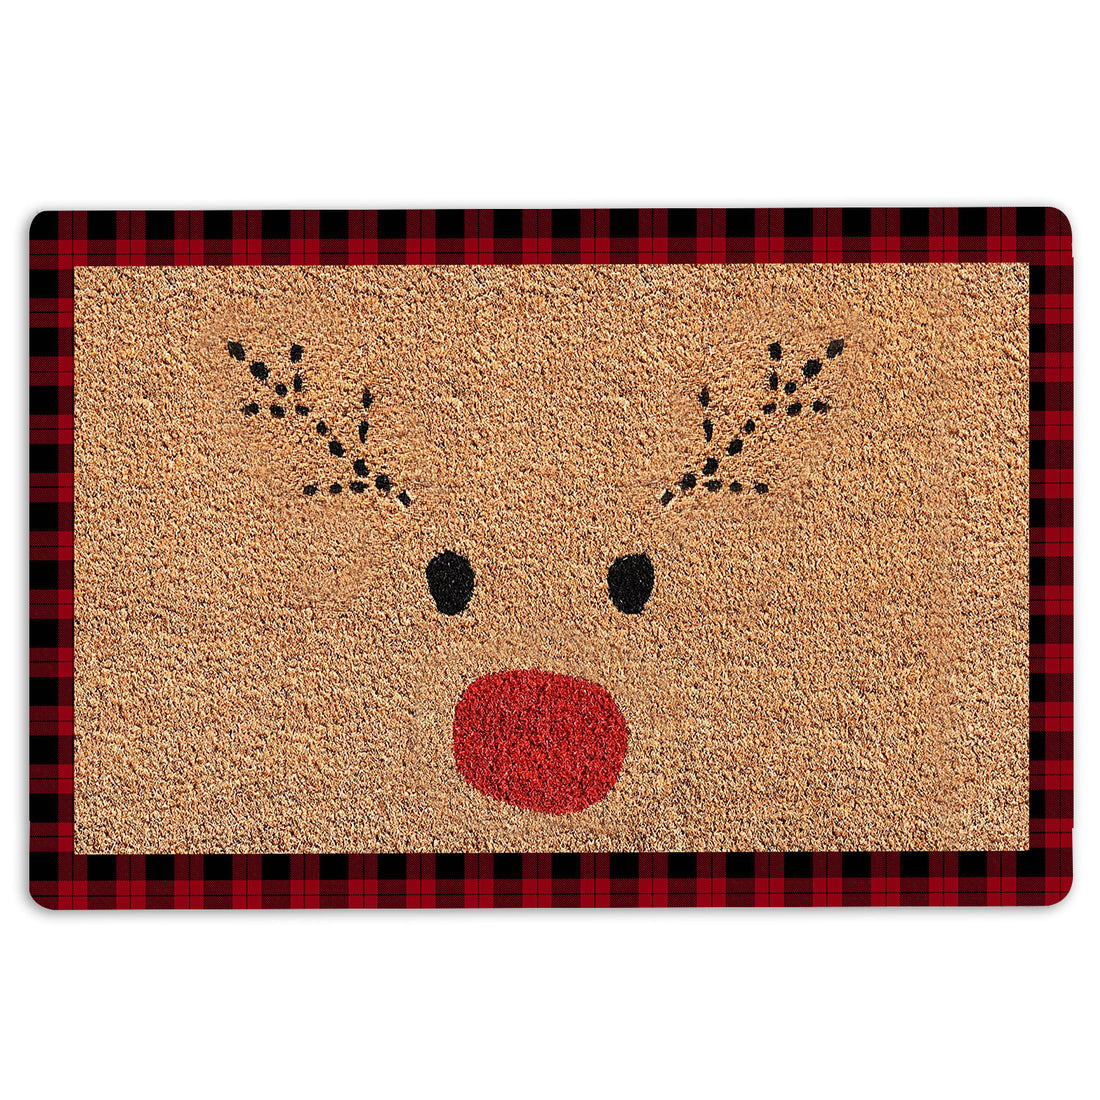 Ohaprints-Doormat-Outdoor-Indoor-Merrry-Christmas-Cute-Rudolph-Red-Buffalo-Plaid-Xmas-Holiday-Rubber-Door-Mat-2012-18'' x 30''